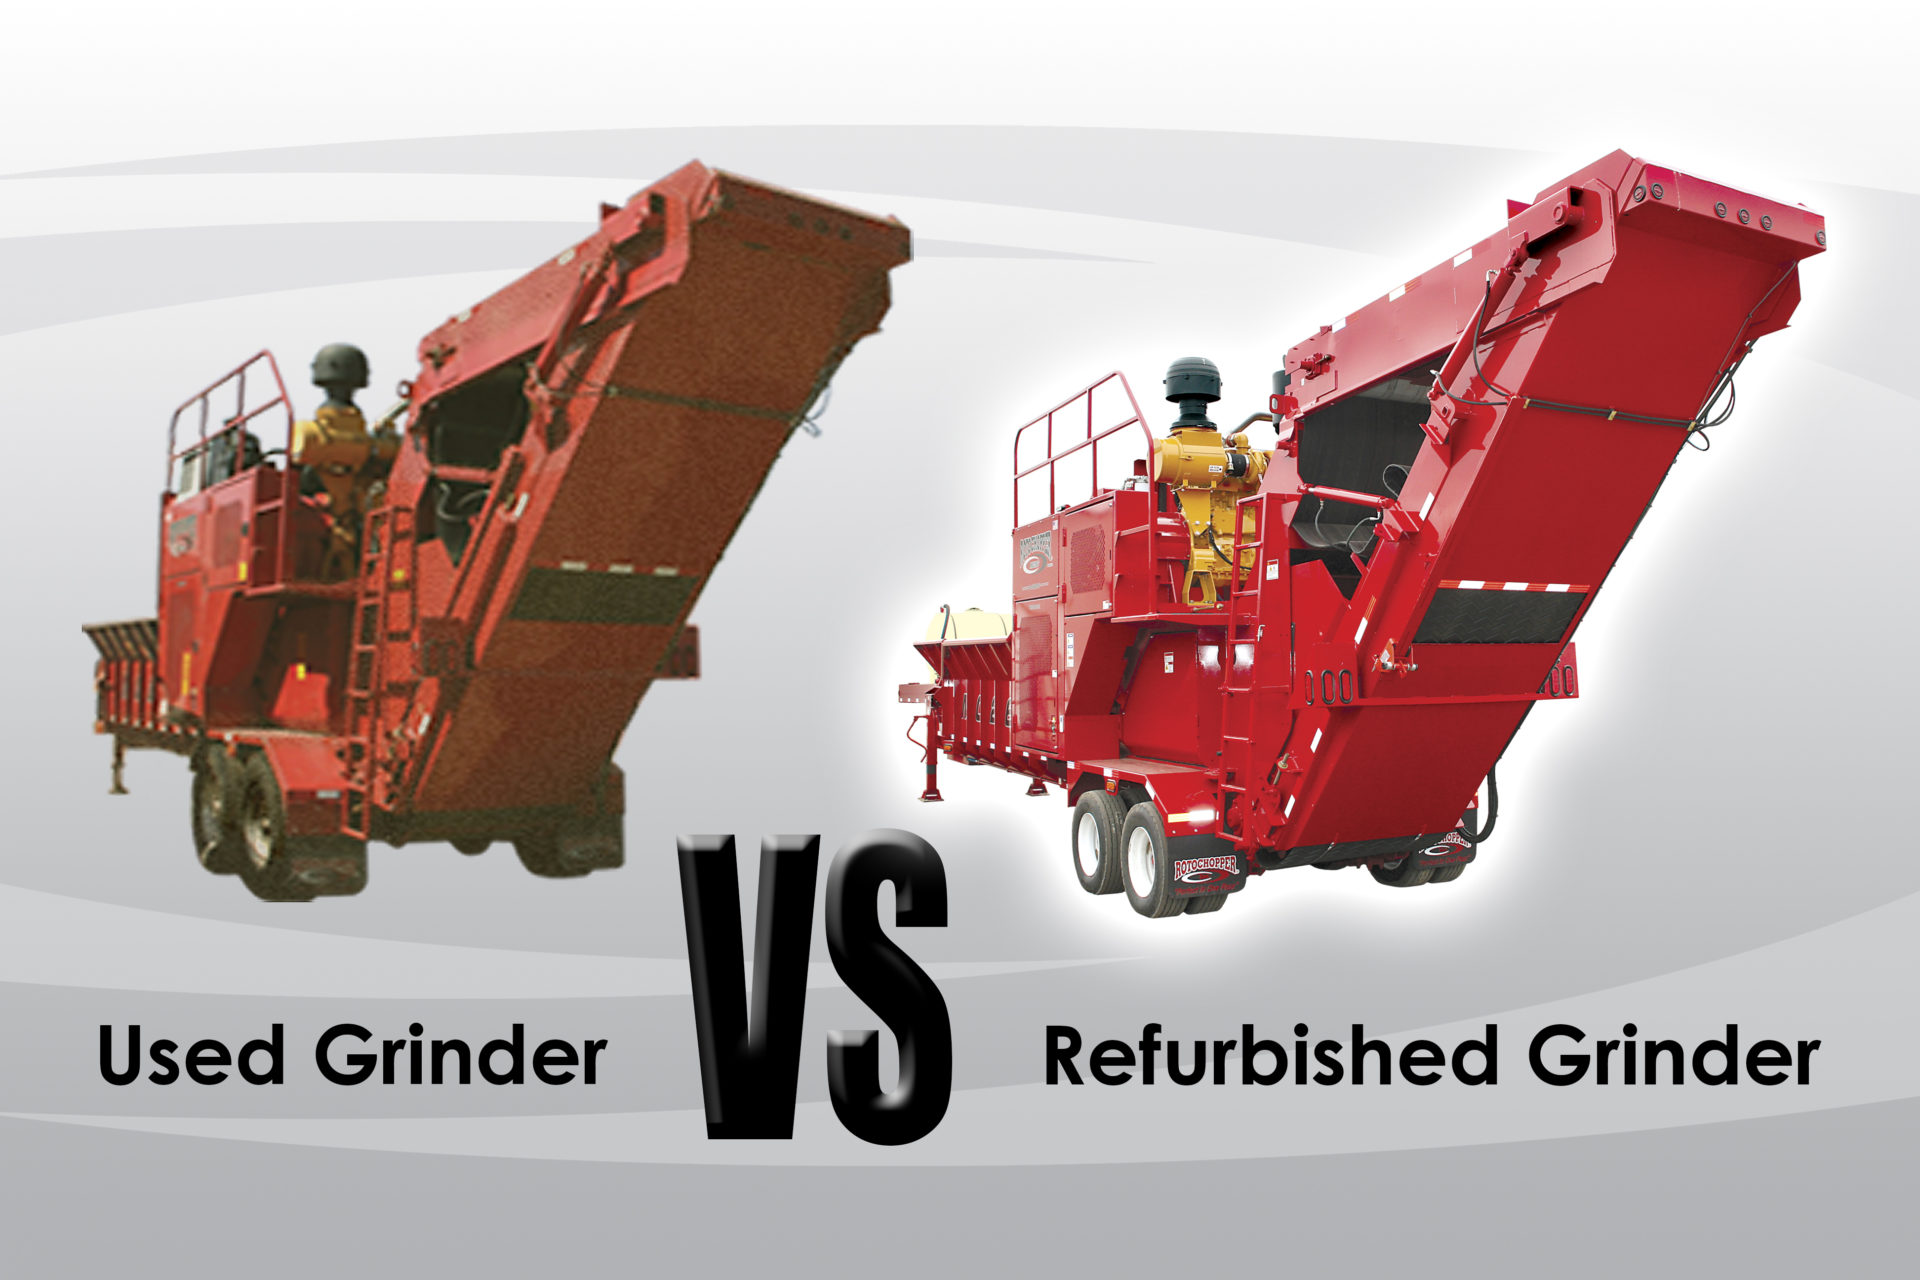 refurbished vs used wood grinder